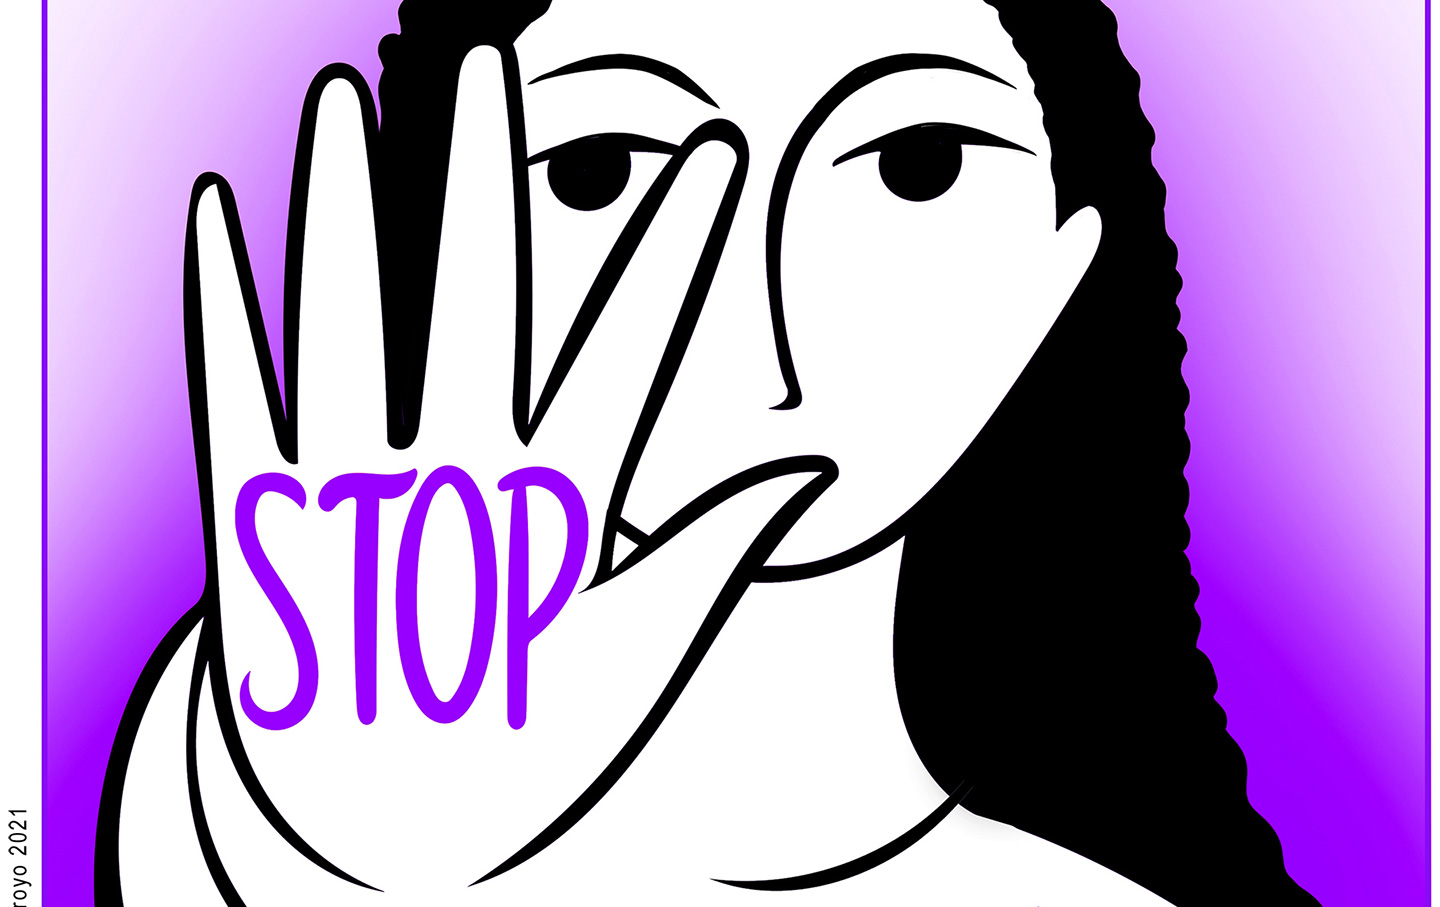 November 25, International Day for the Elimination of Violence Against Women